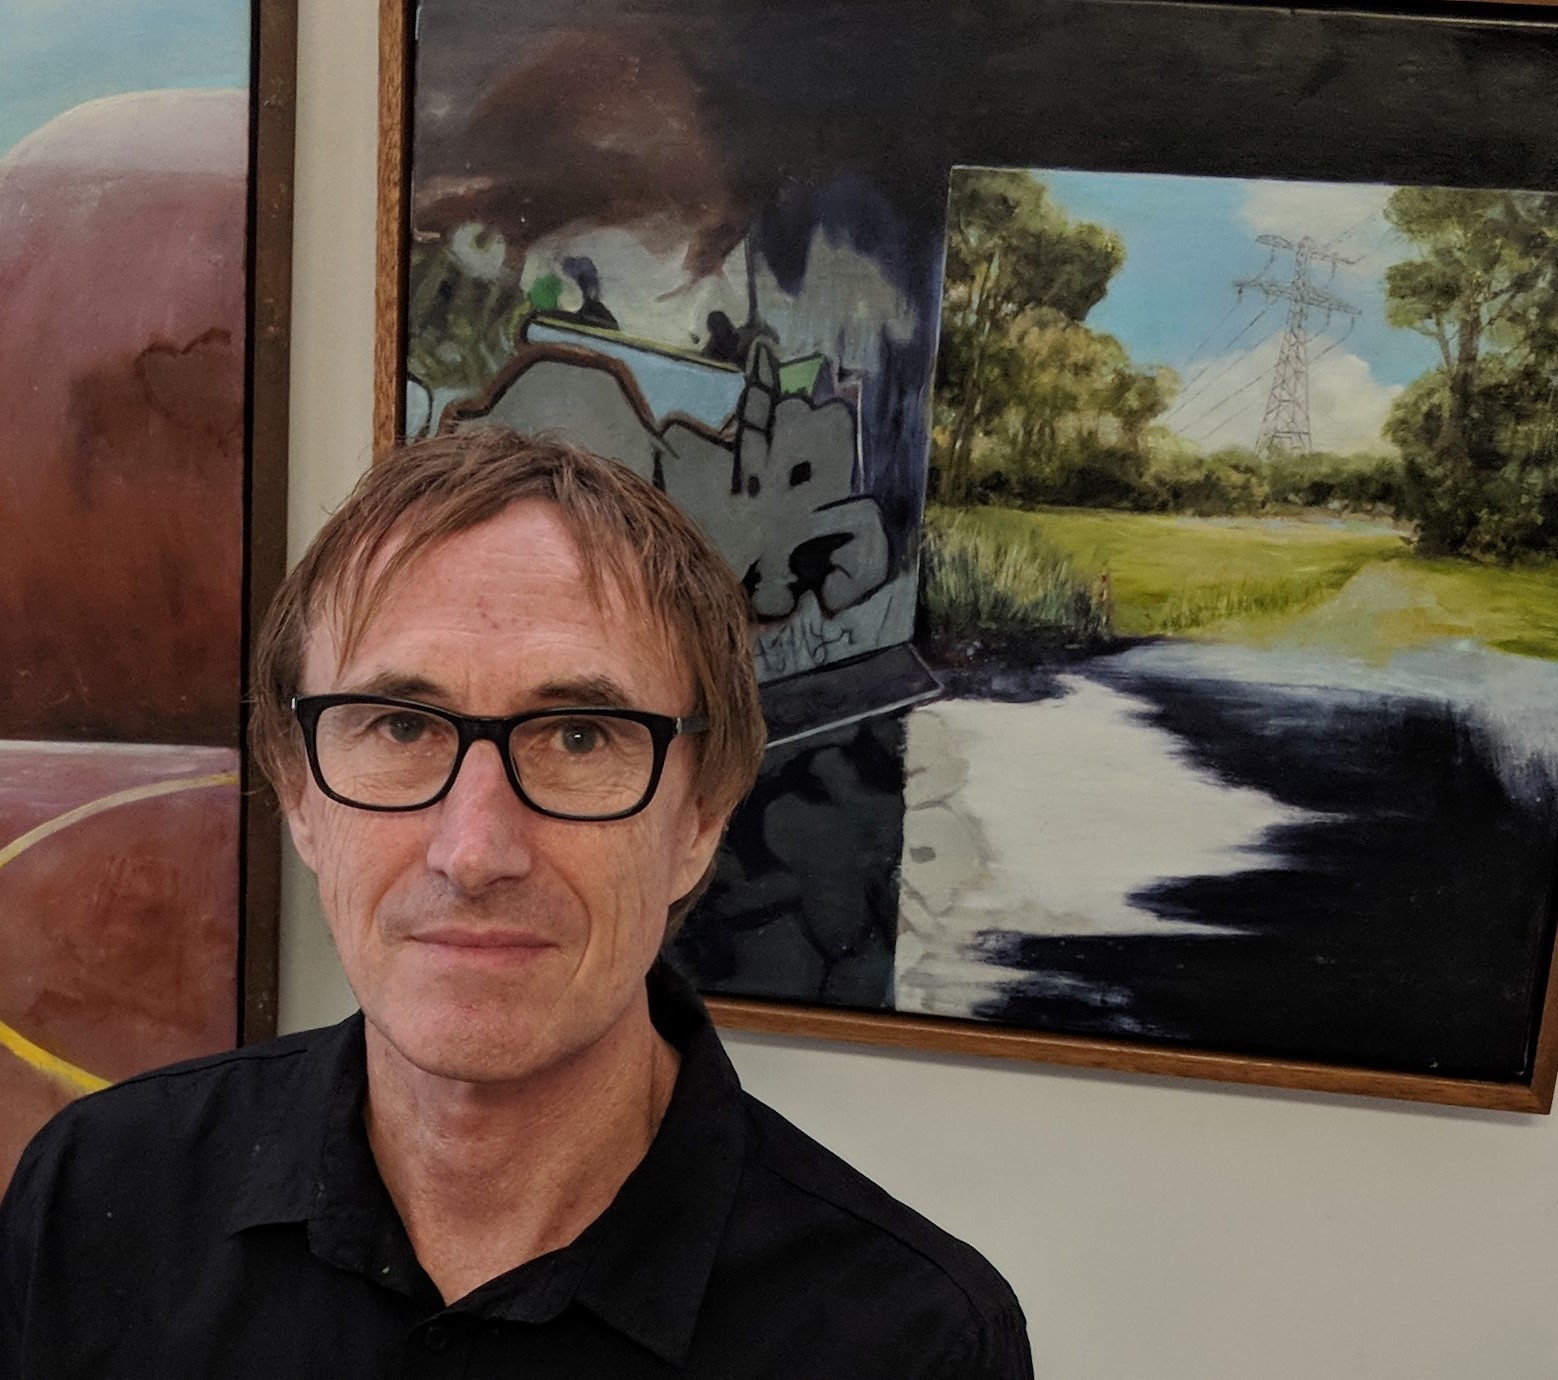 Queensland College of Art alumnus, Dennis McCart, posing in front of one of his paintings